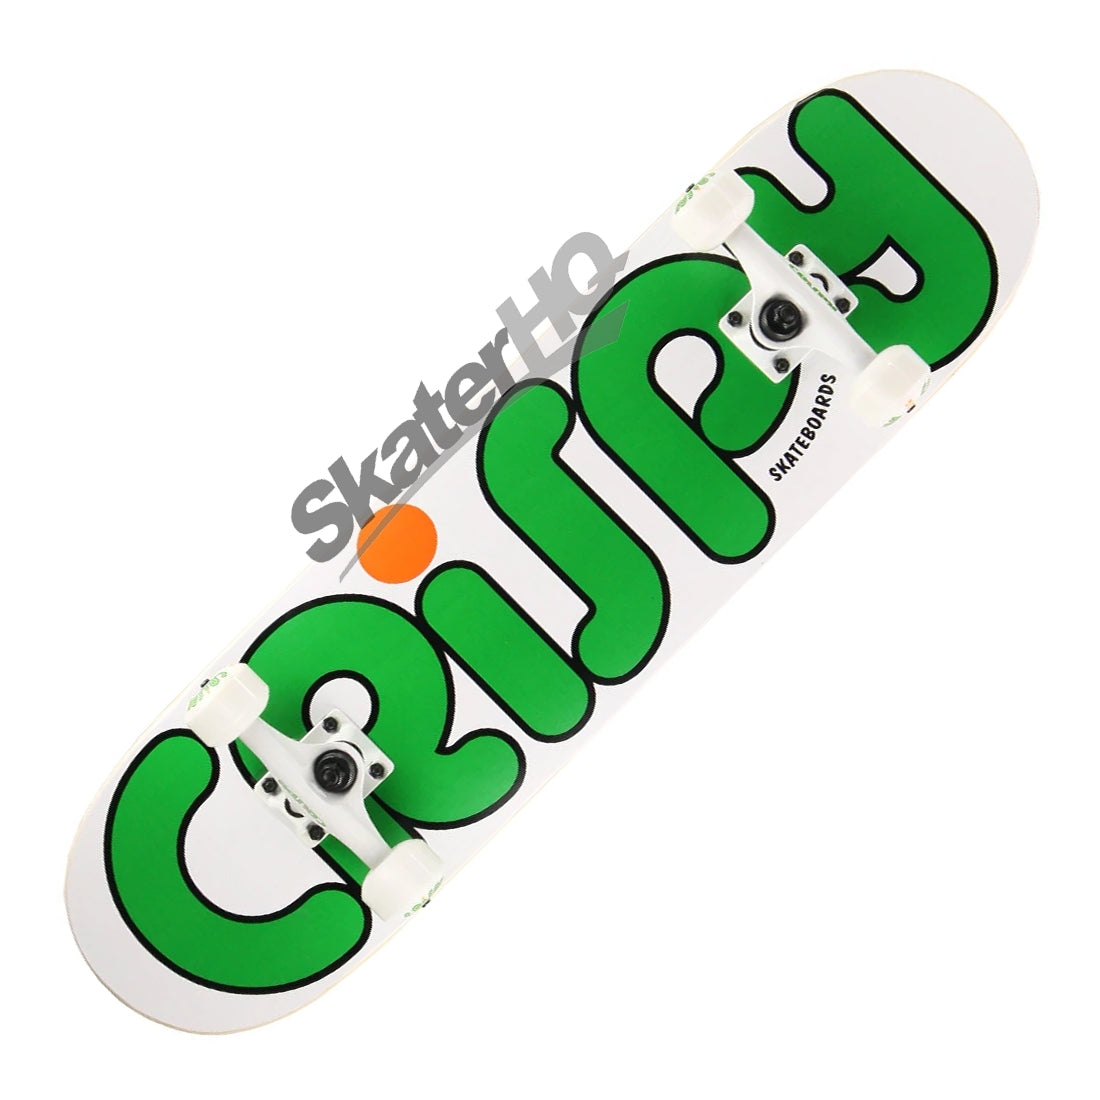 Crispy Rookie 7.75 Complete - White/Green Skateboard Completes Modern Street